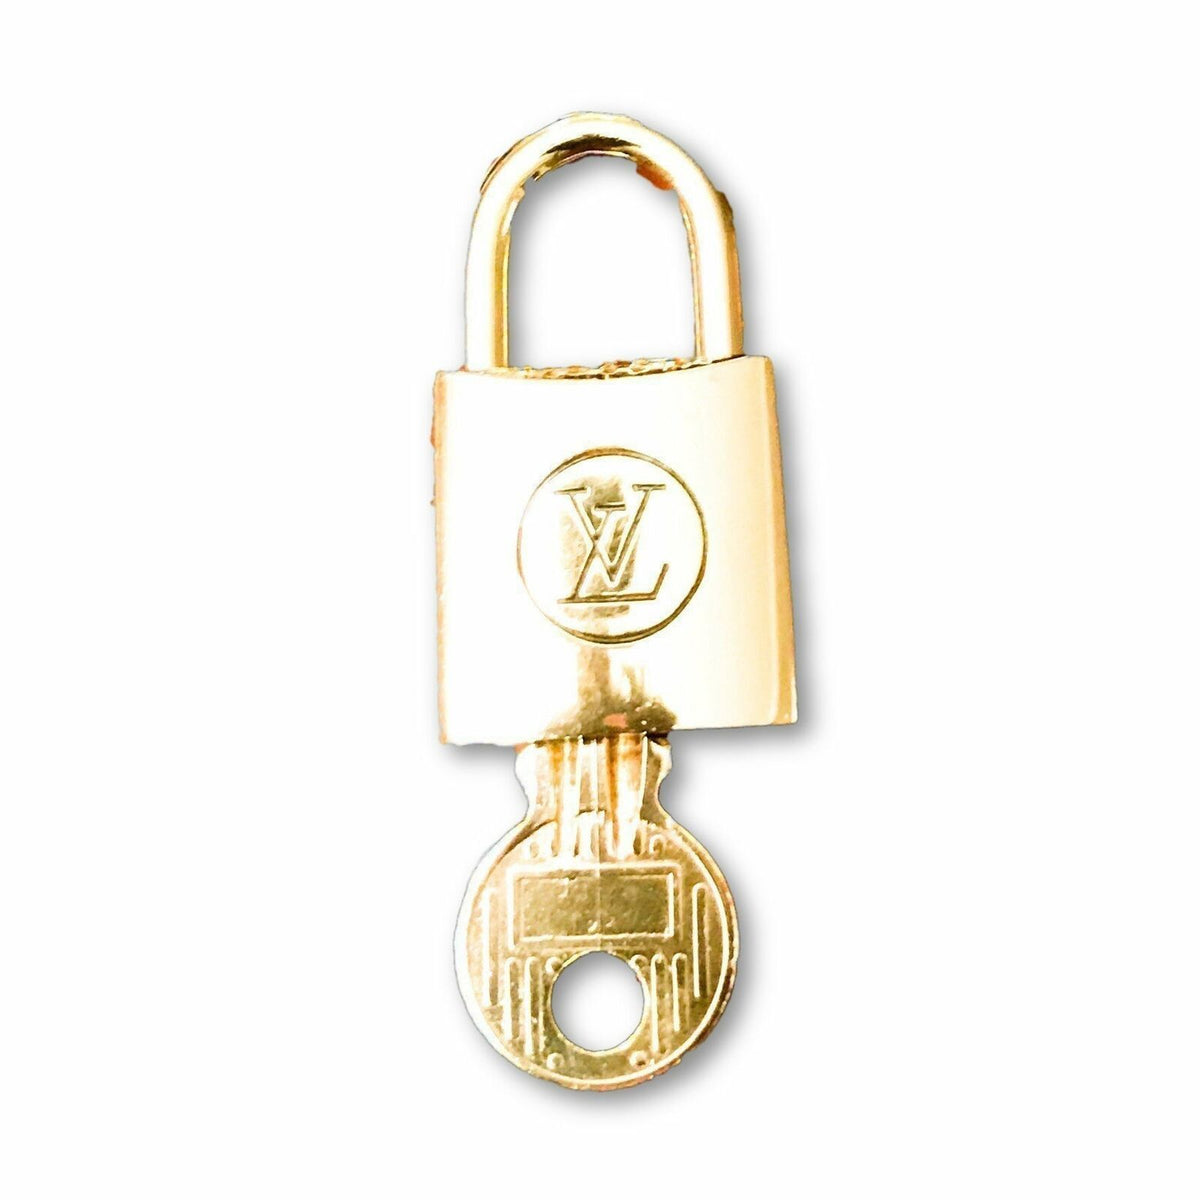 Guaranteed Authentic - Vintage Louis Vuitton Lock & Key circa. 1980's